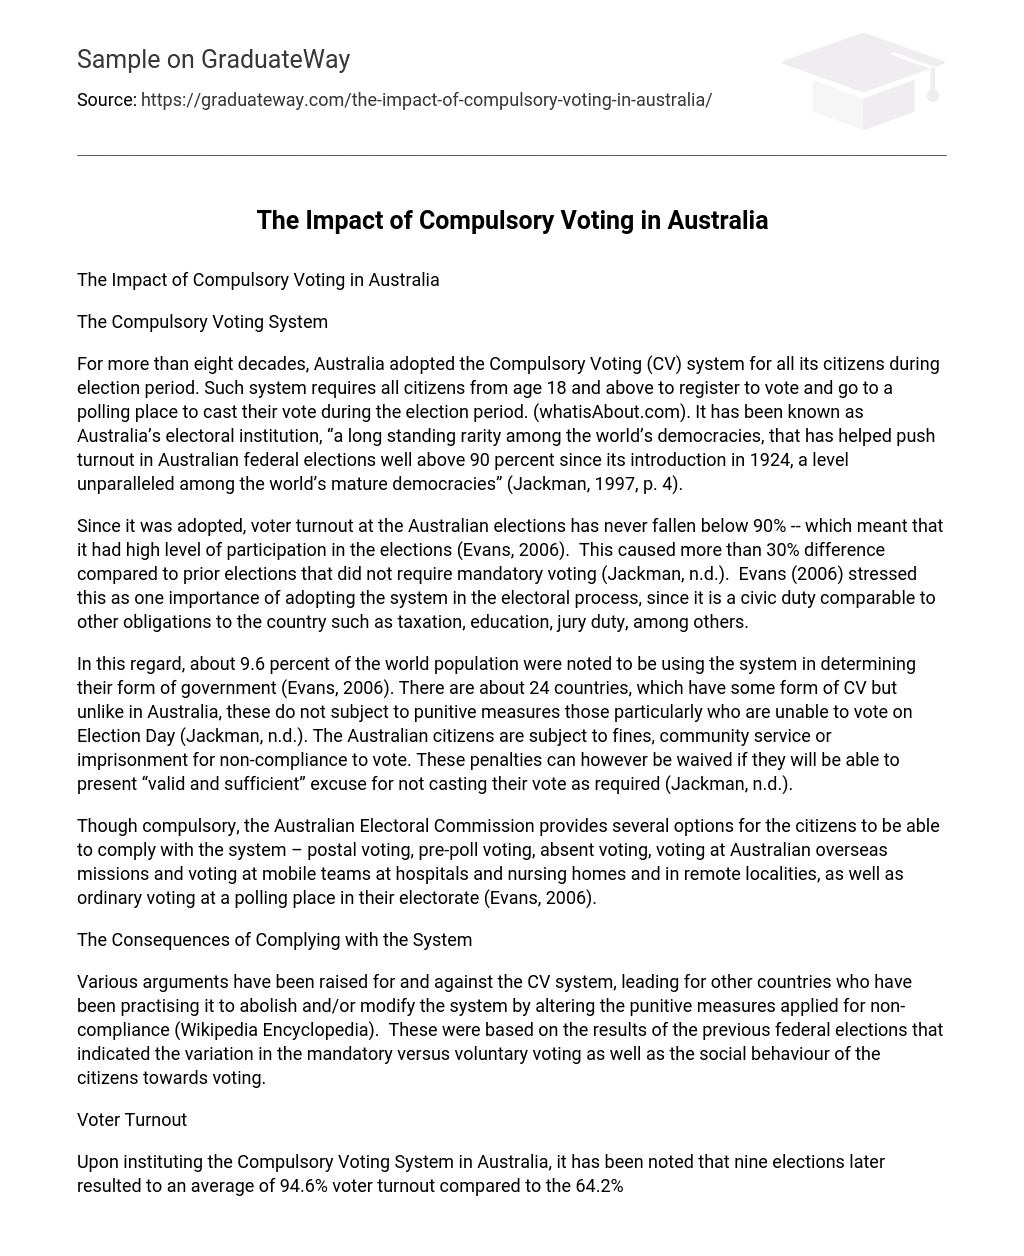 The Impact of Compulsory Voting in Australia